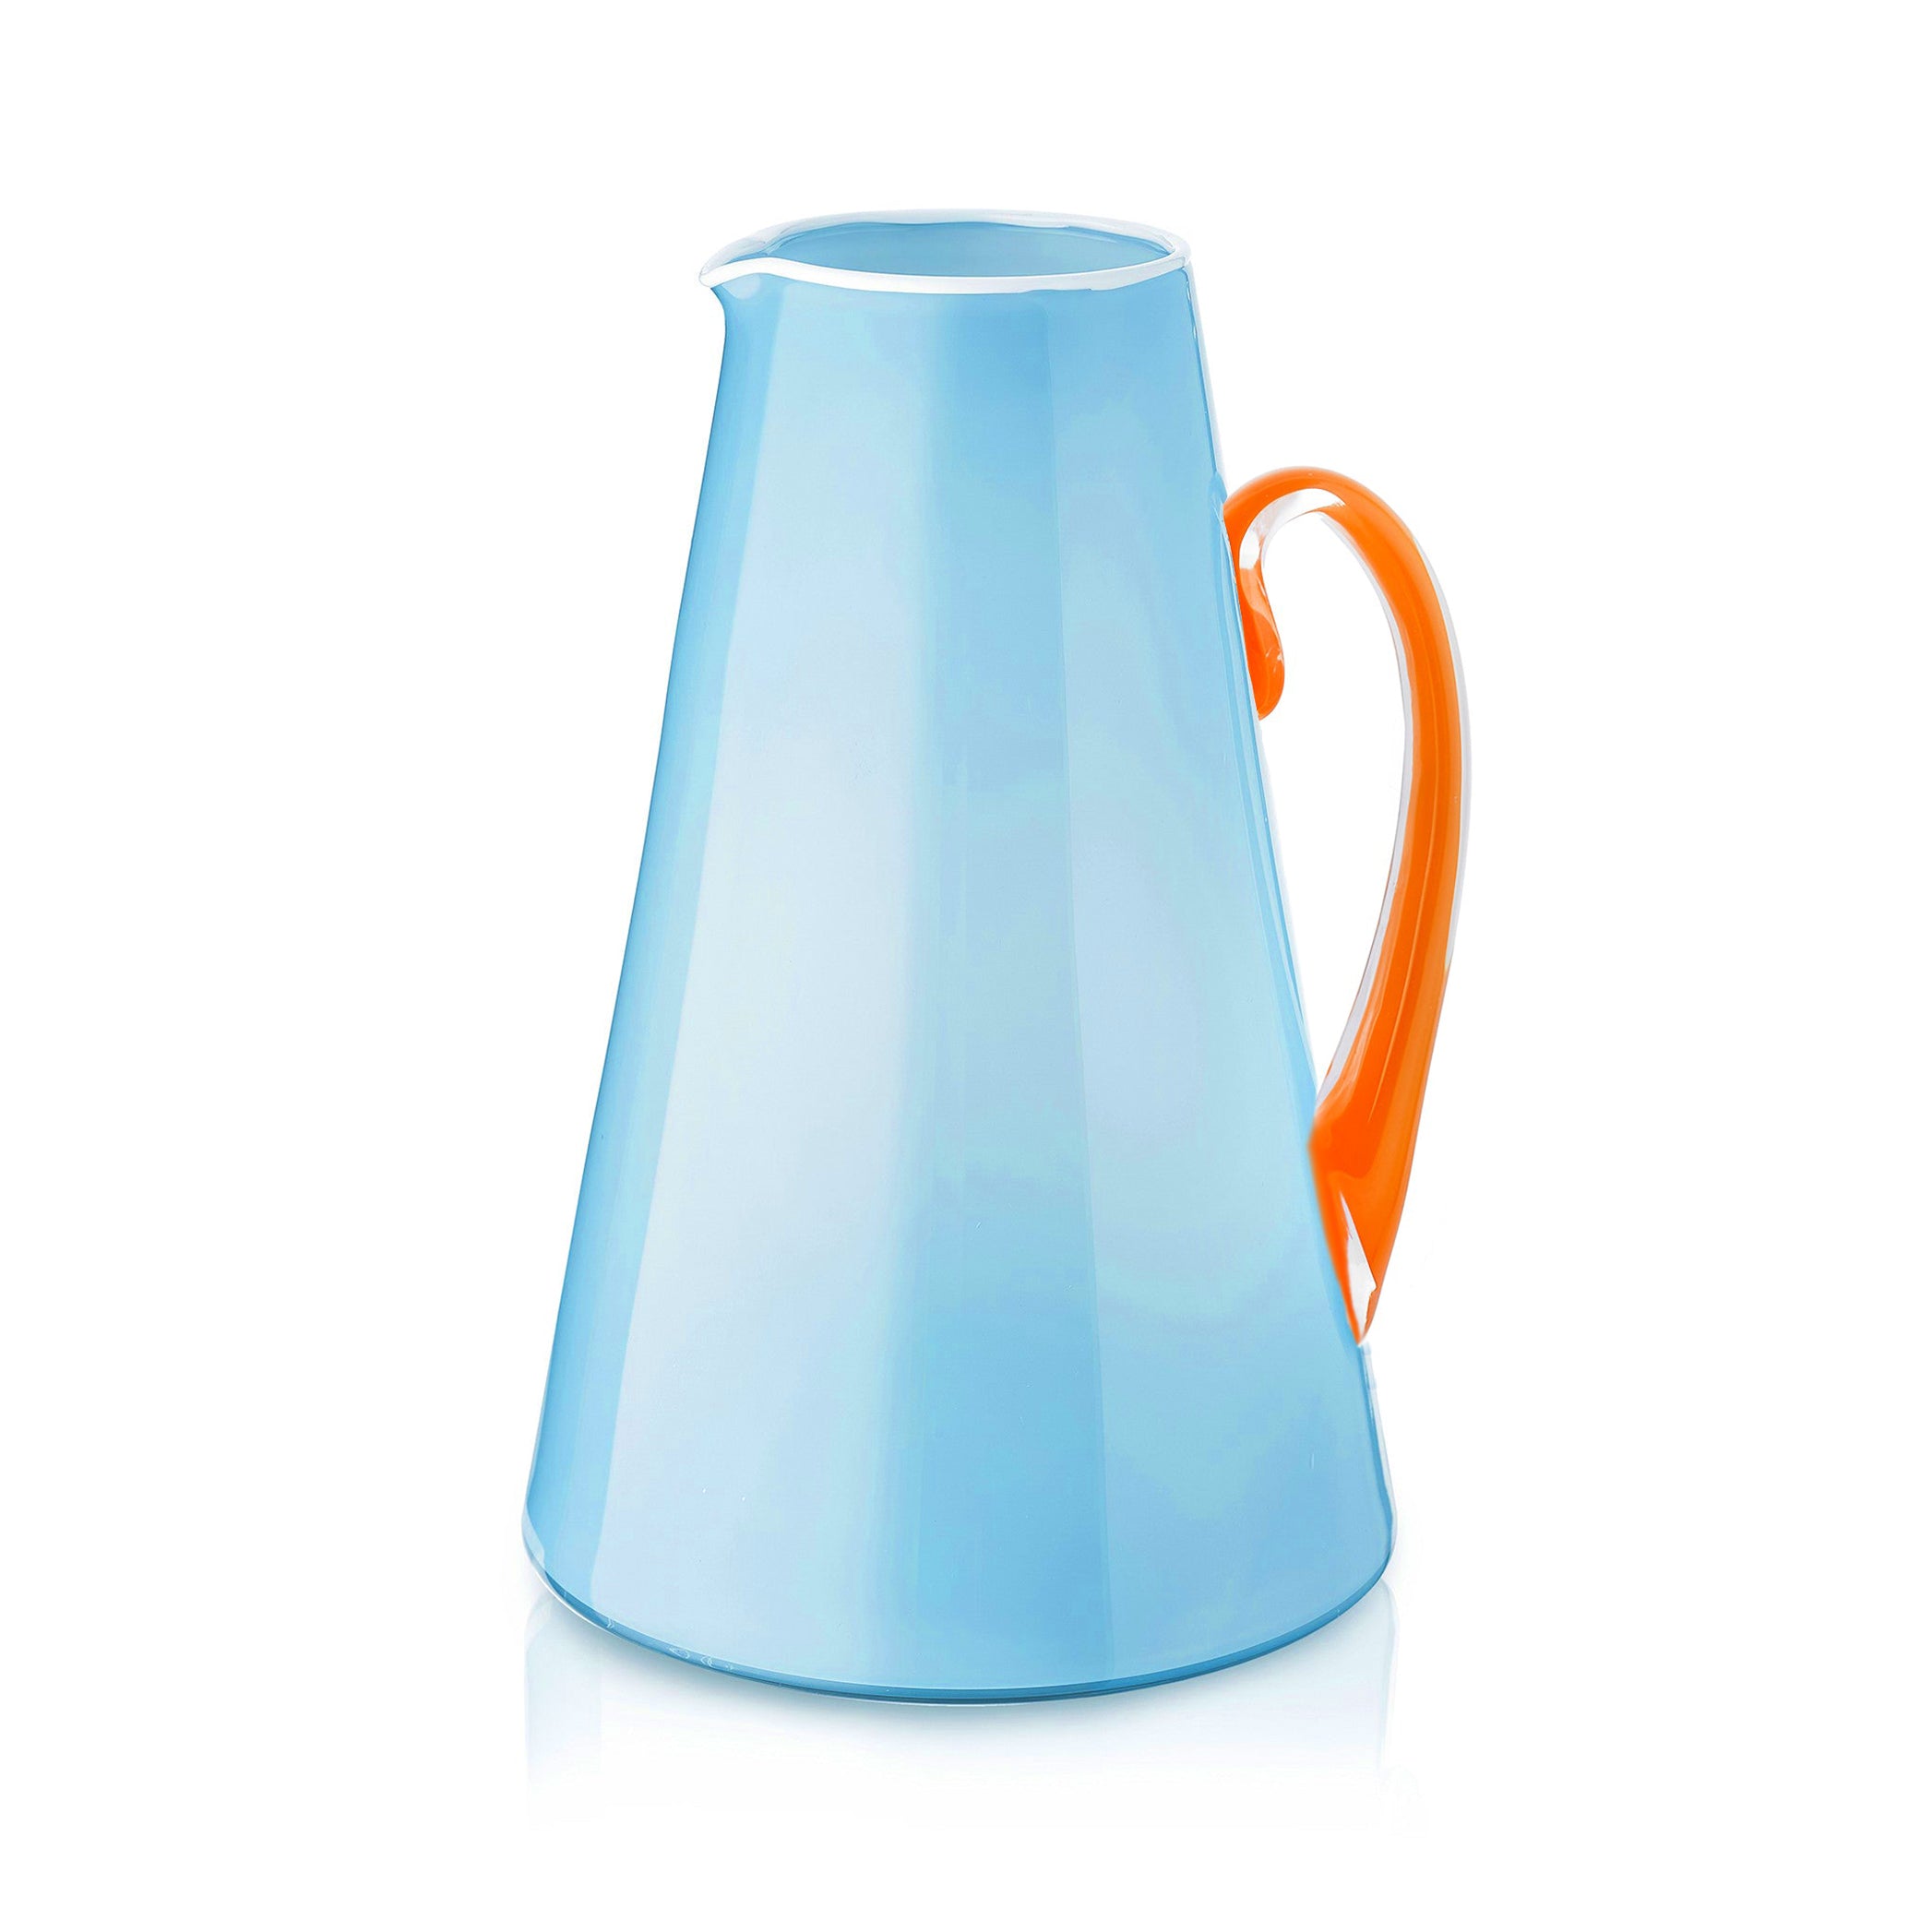 Handblown Glass Bumba Jug in Sky Blue and Orange, 3lt